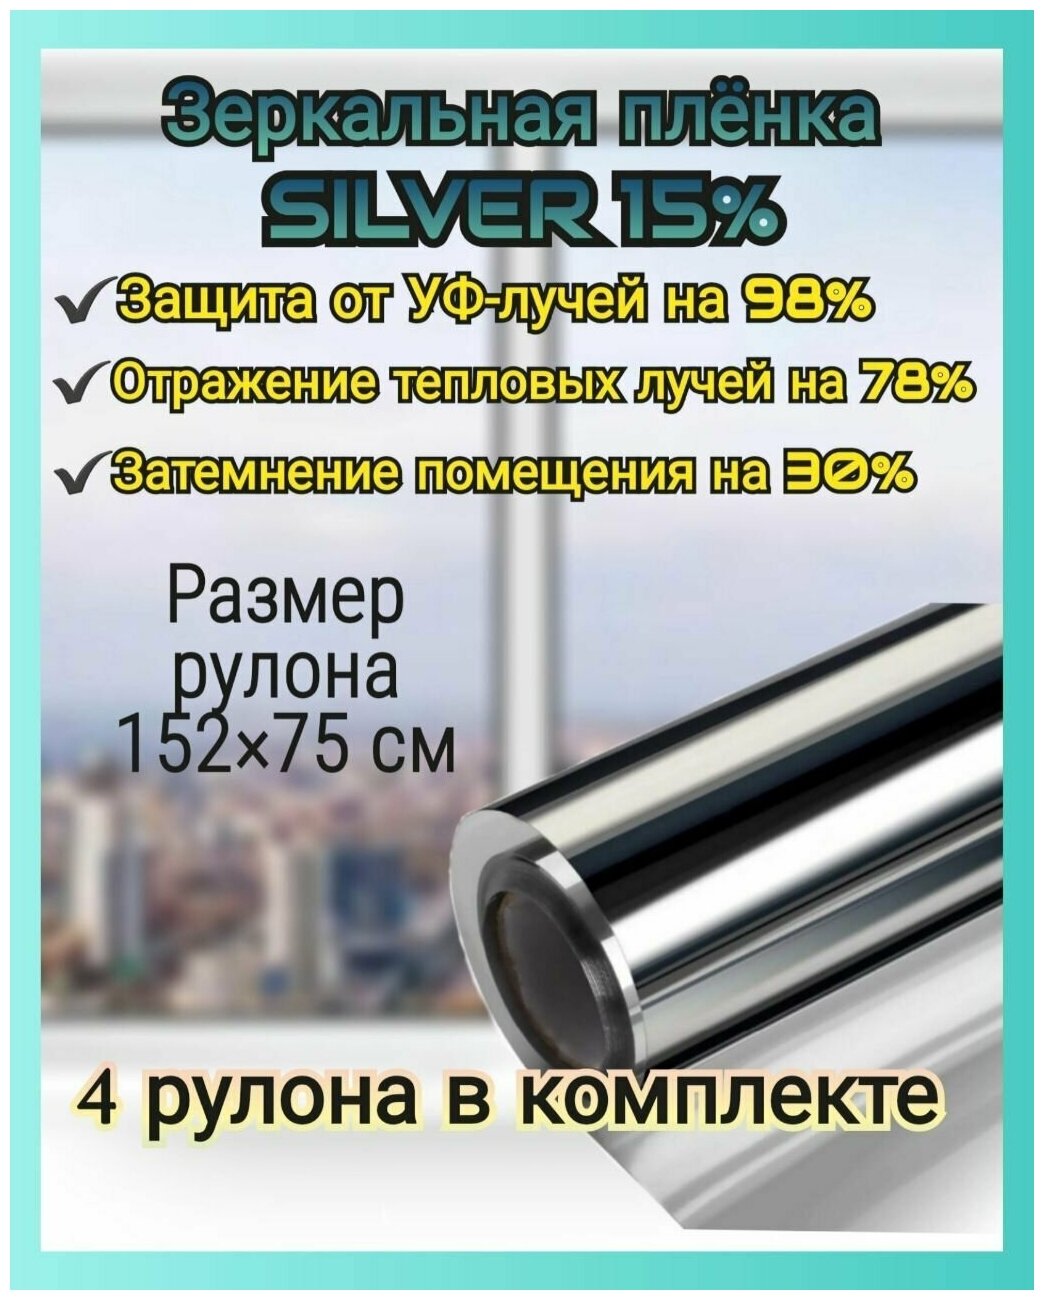 Самоклеящаяся плёнка для окон Silver 15%